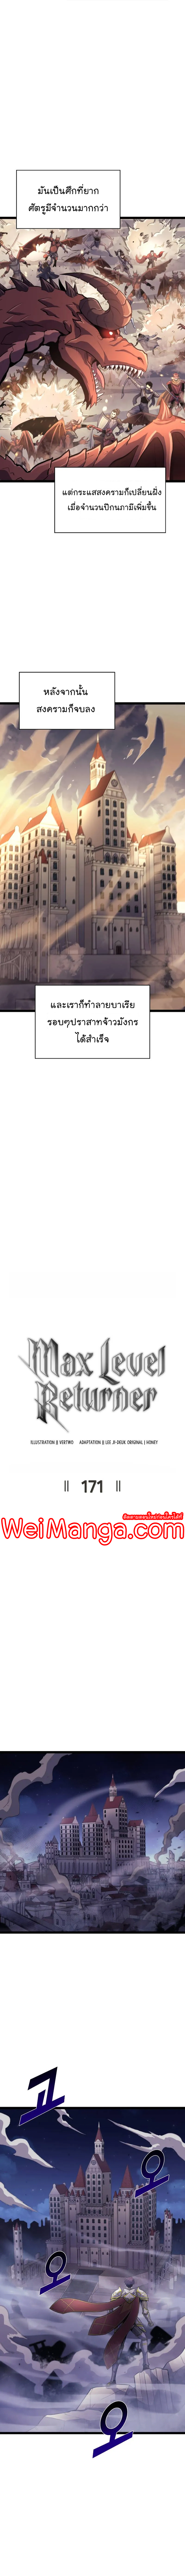 max 171 (2)